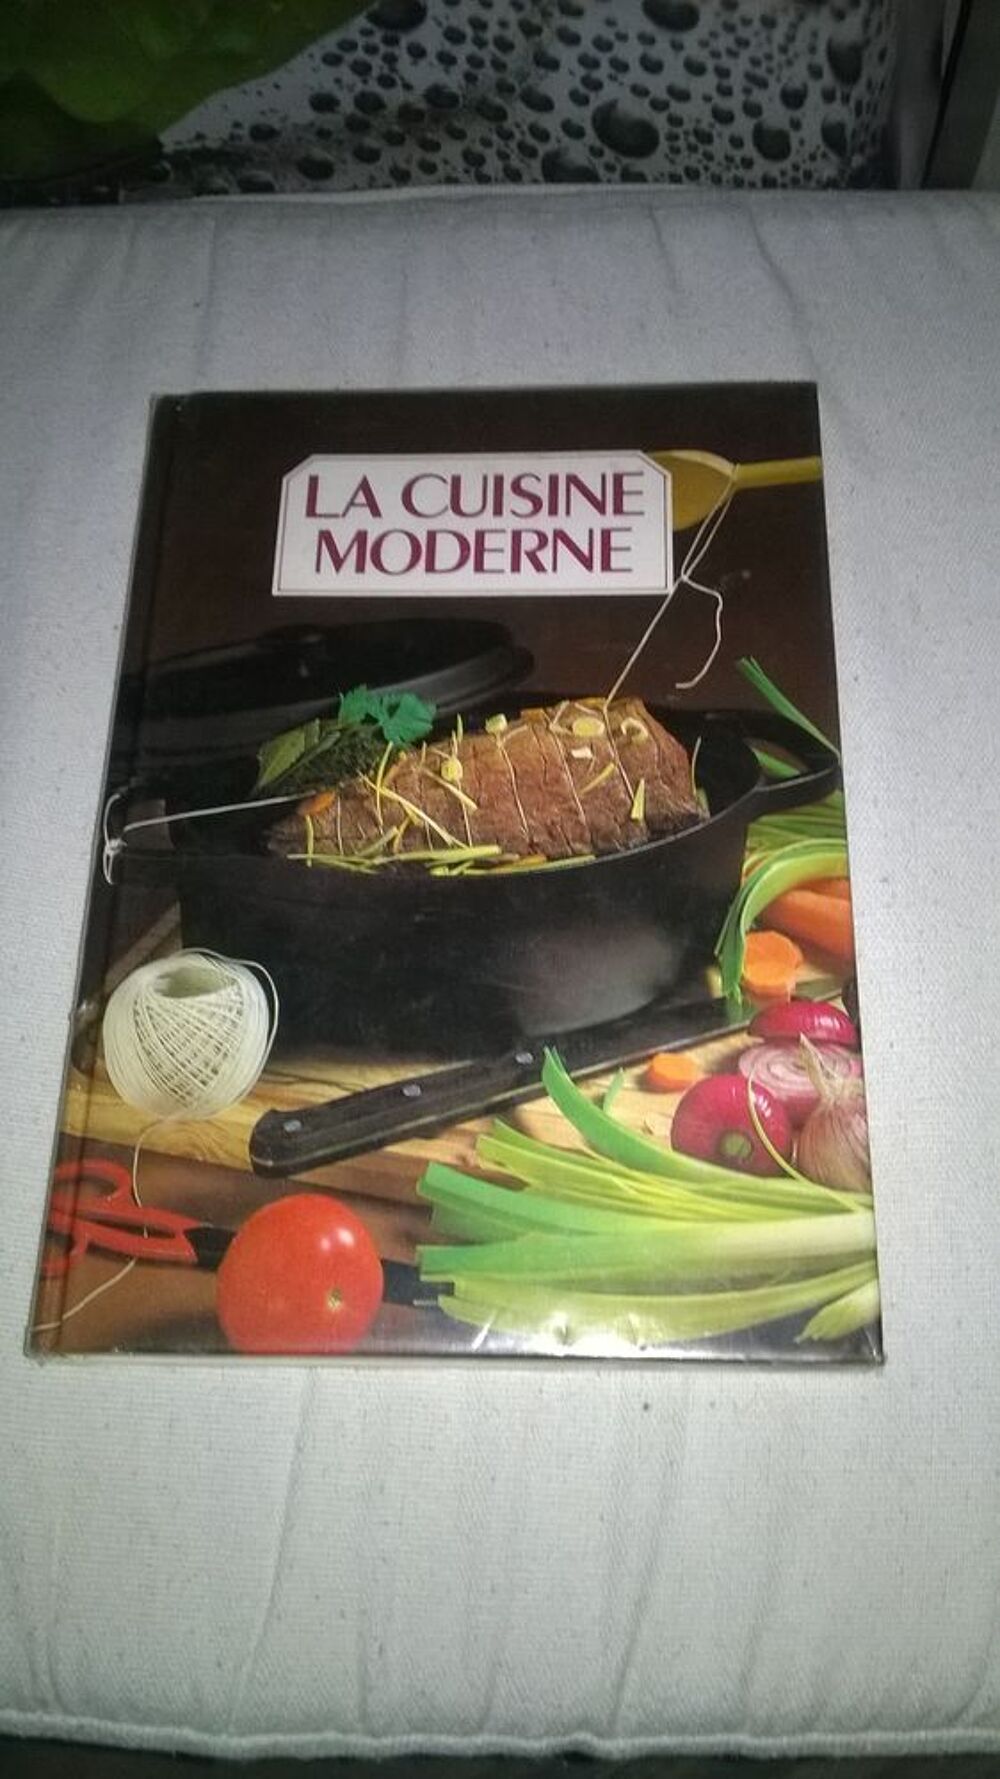 Livre La cuisine moderne
Fran&ccedil;oise Bernard
1983
Excellent Livres et BD